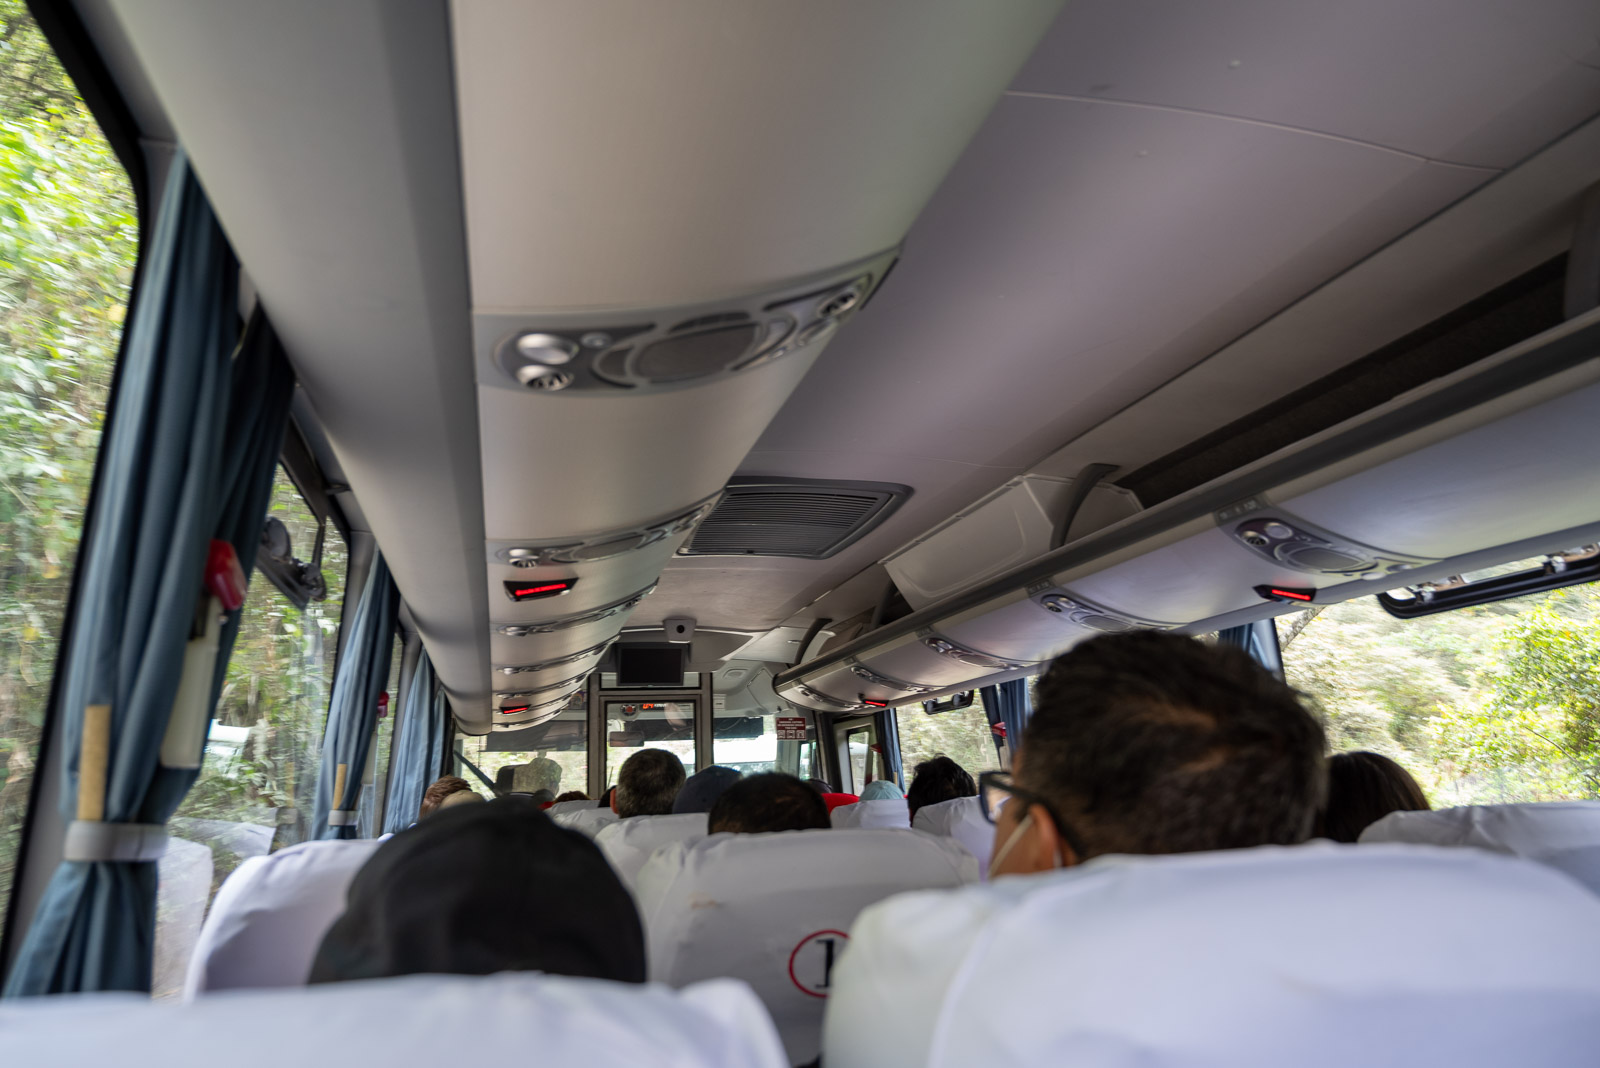 Riding a sleek modern bus on the twisting road up to Machu Picchu.